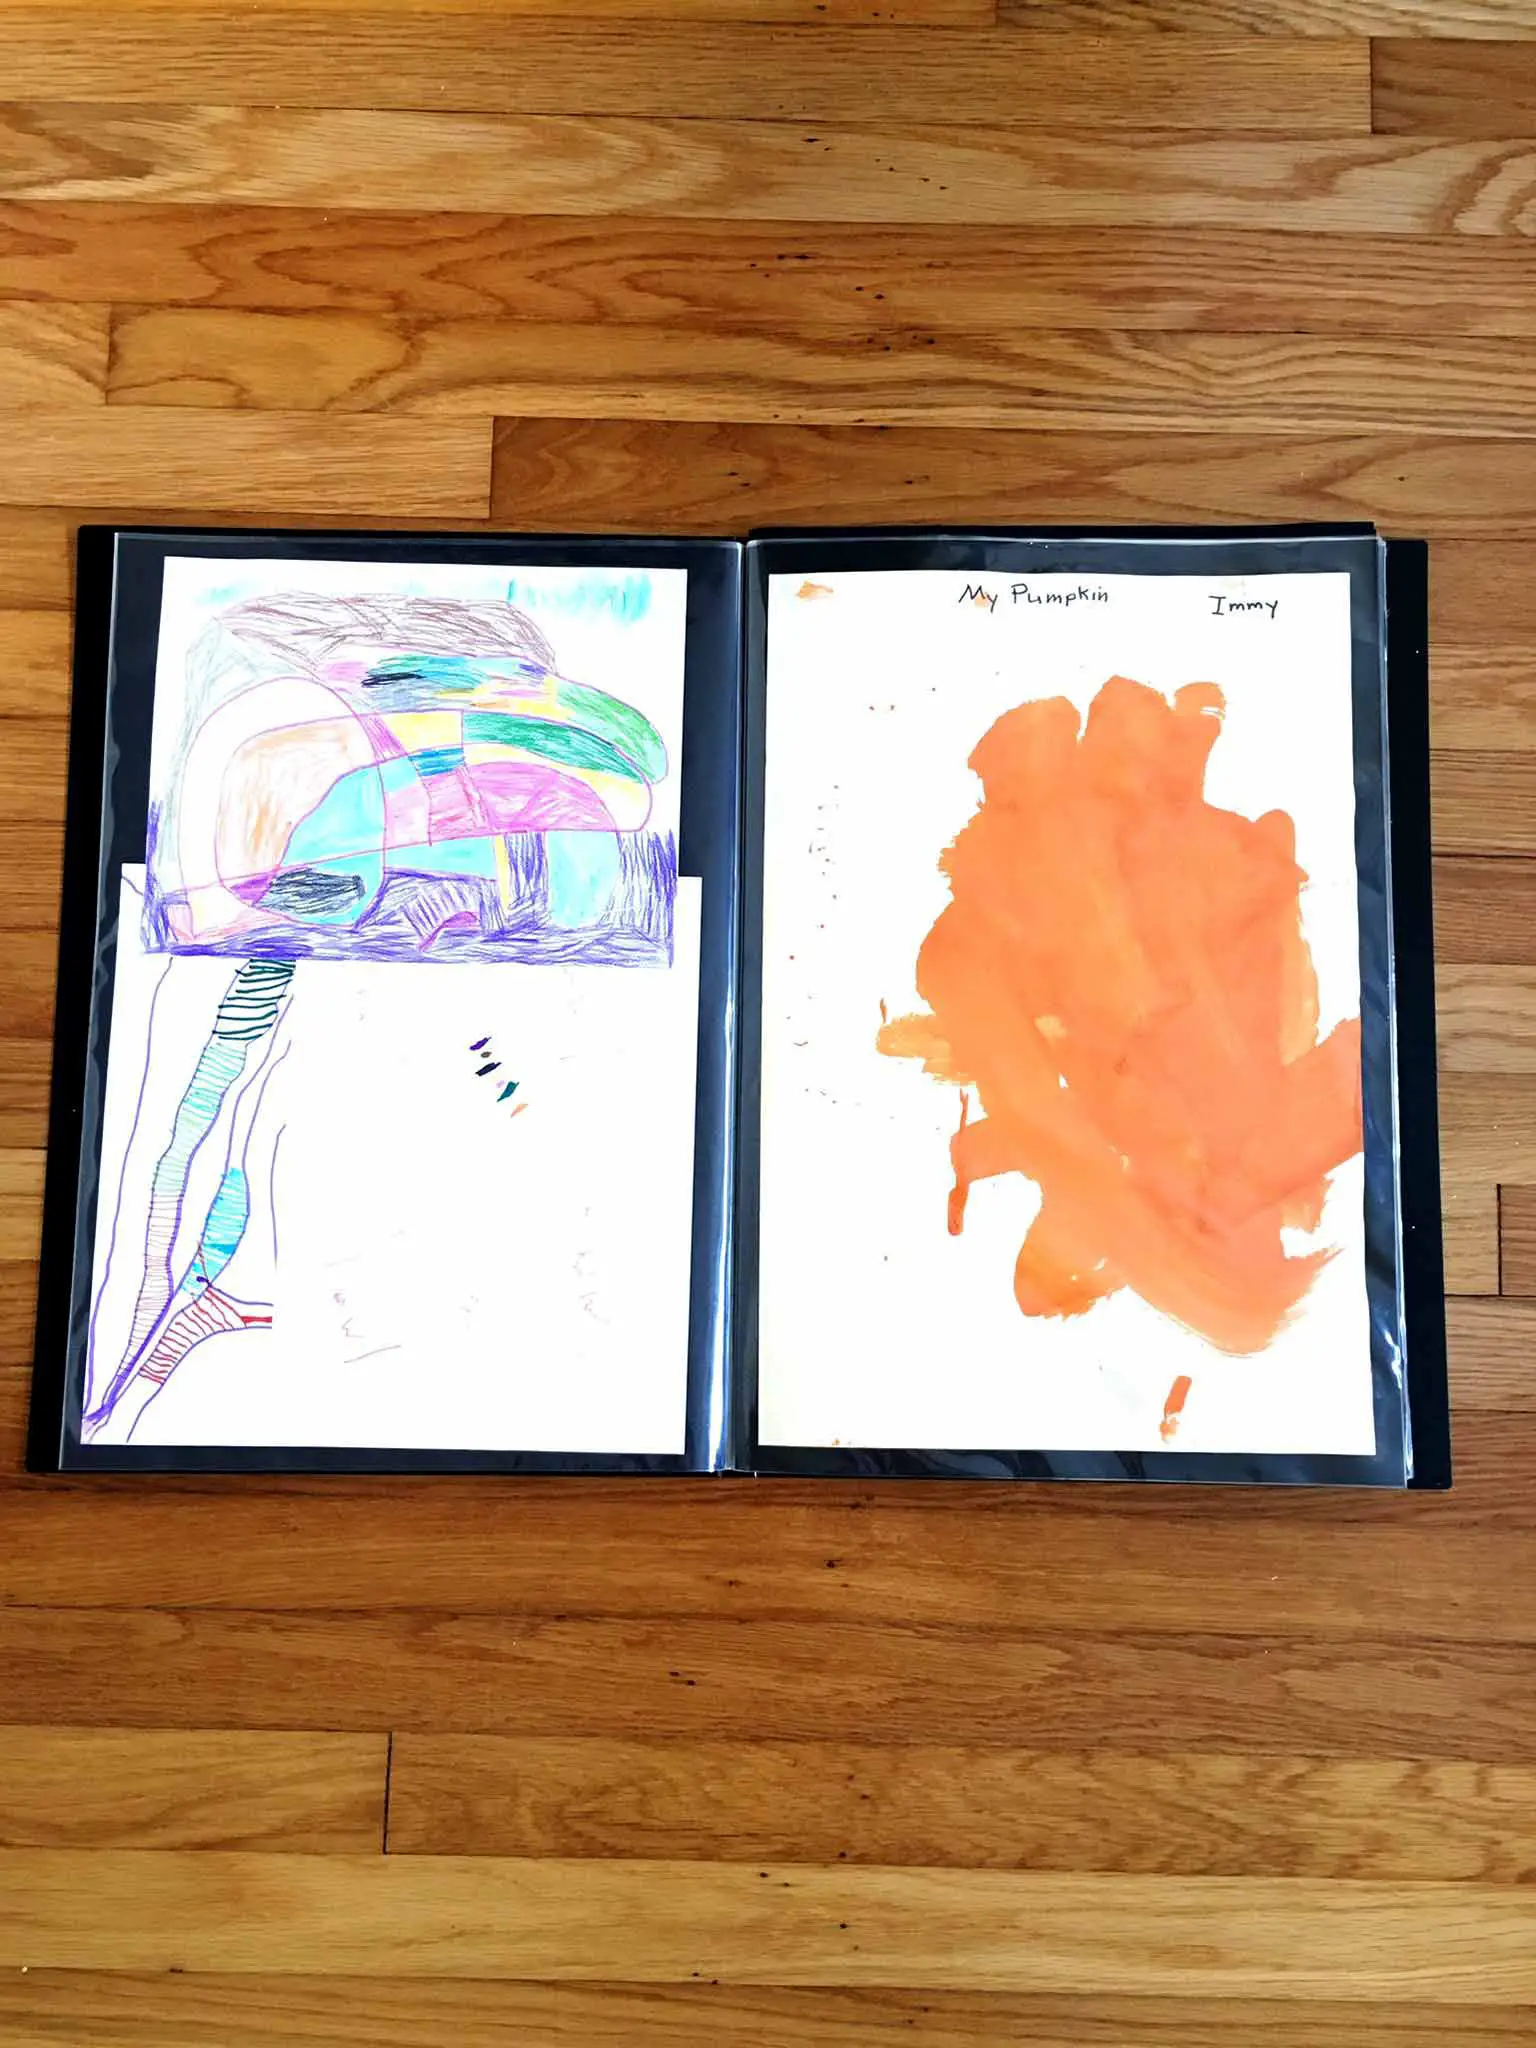 Art portfolio - 4 simple steps to keeping your kids' artwork organized - That Homebird Life Blog